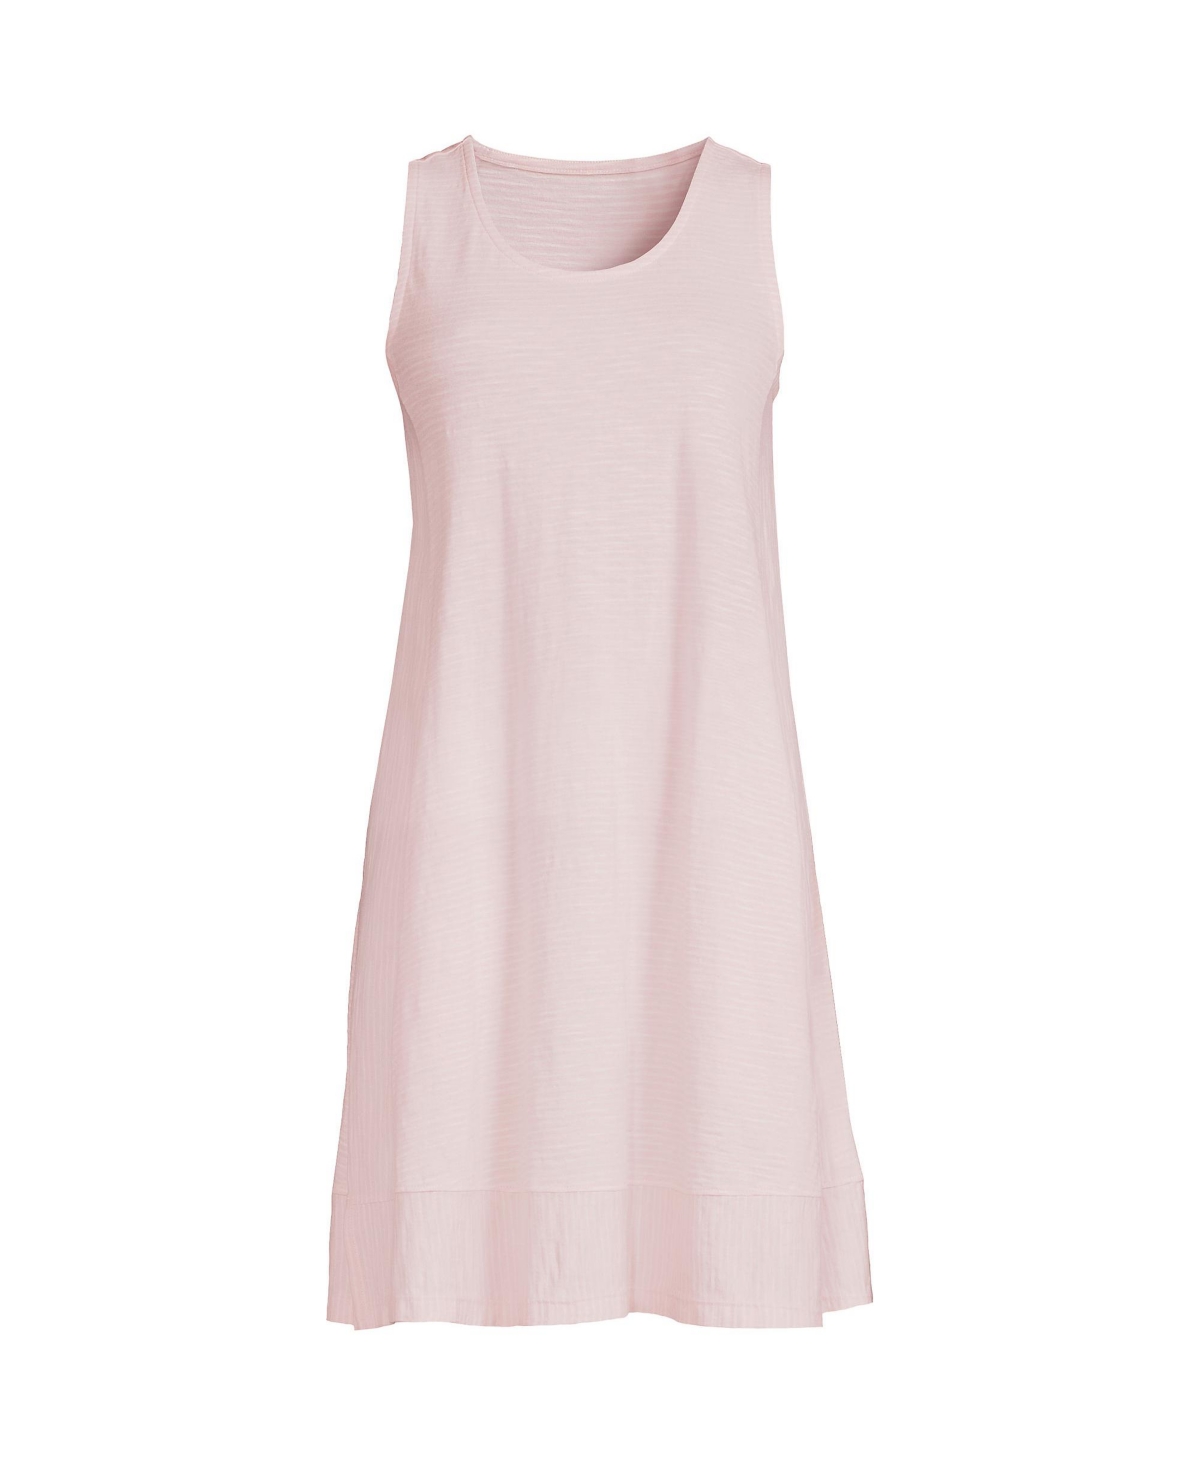 Women's Petite Cotton Slub Tank Dress - Soft tea rose stripe